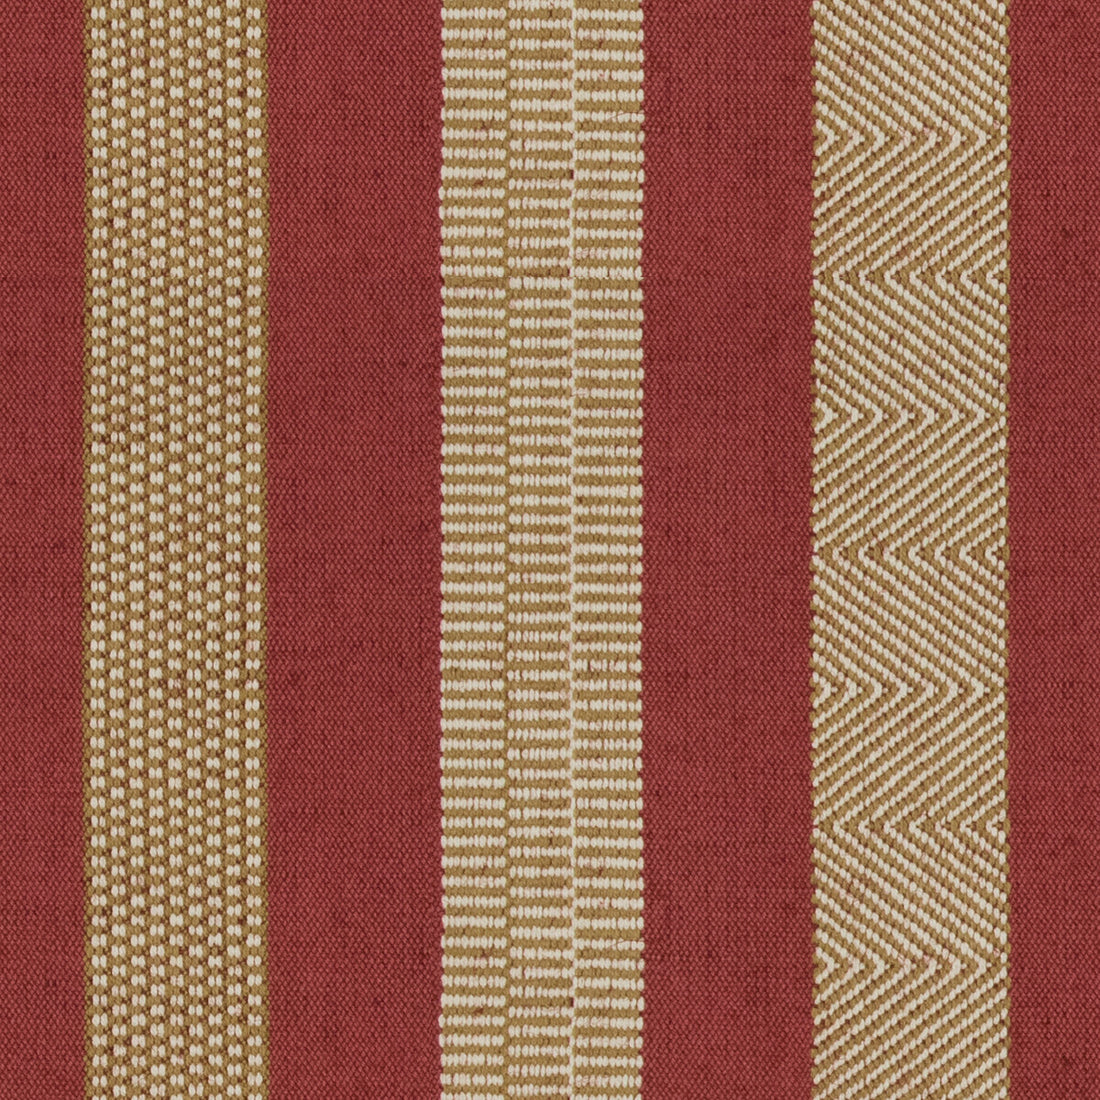 Berber fabric in rhubarb/oro color - pattern 2017100.940.0 - by Lee Jofa in the Oscar De La Renta III collection